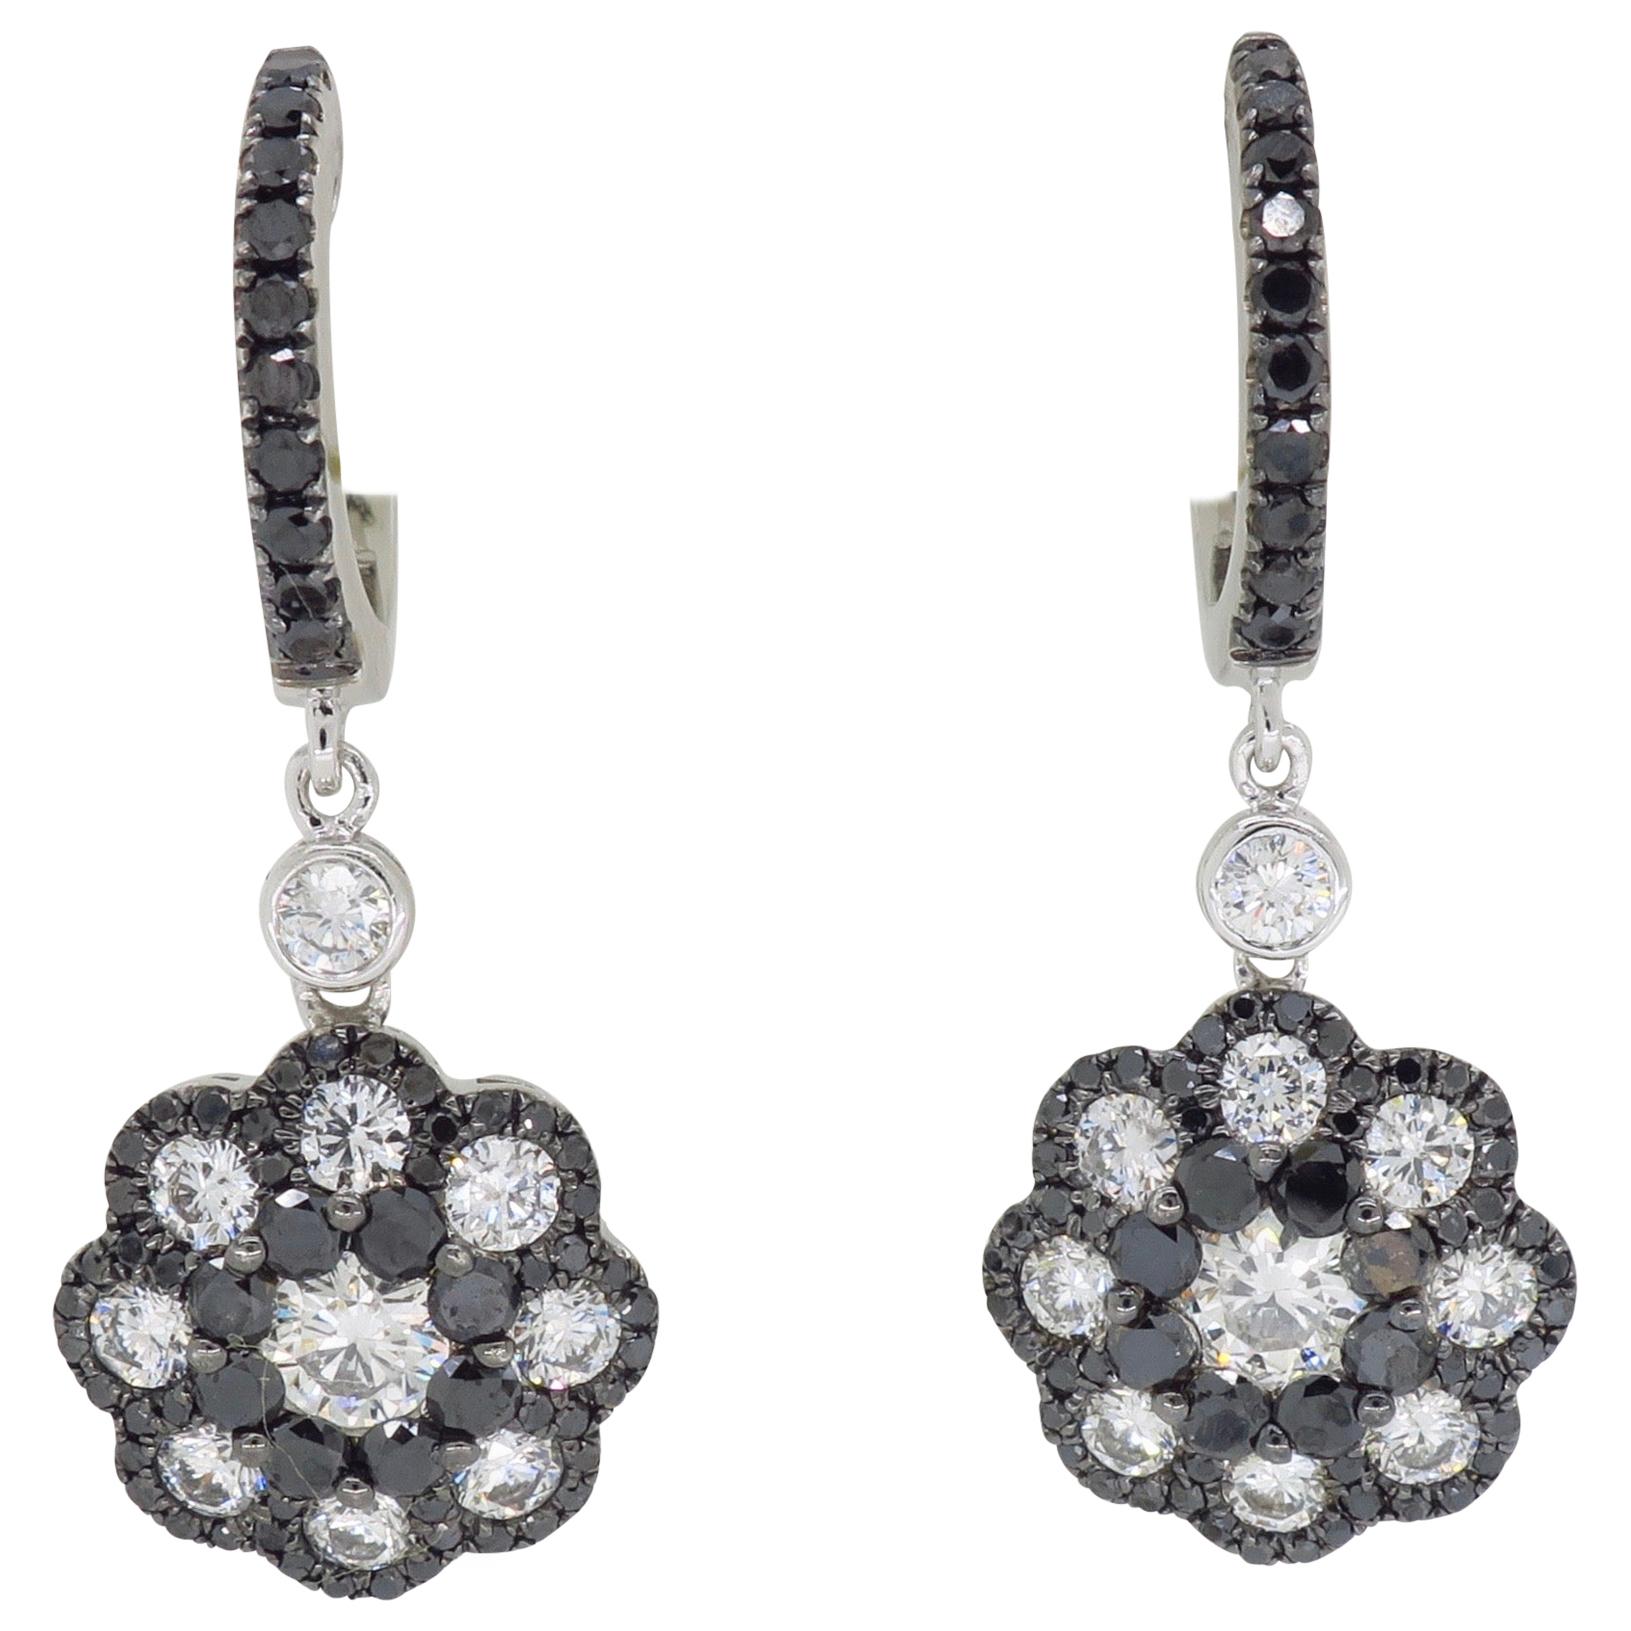 Black and White 2.21 Carat Diamond Drop Earrings